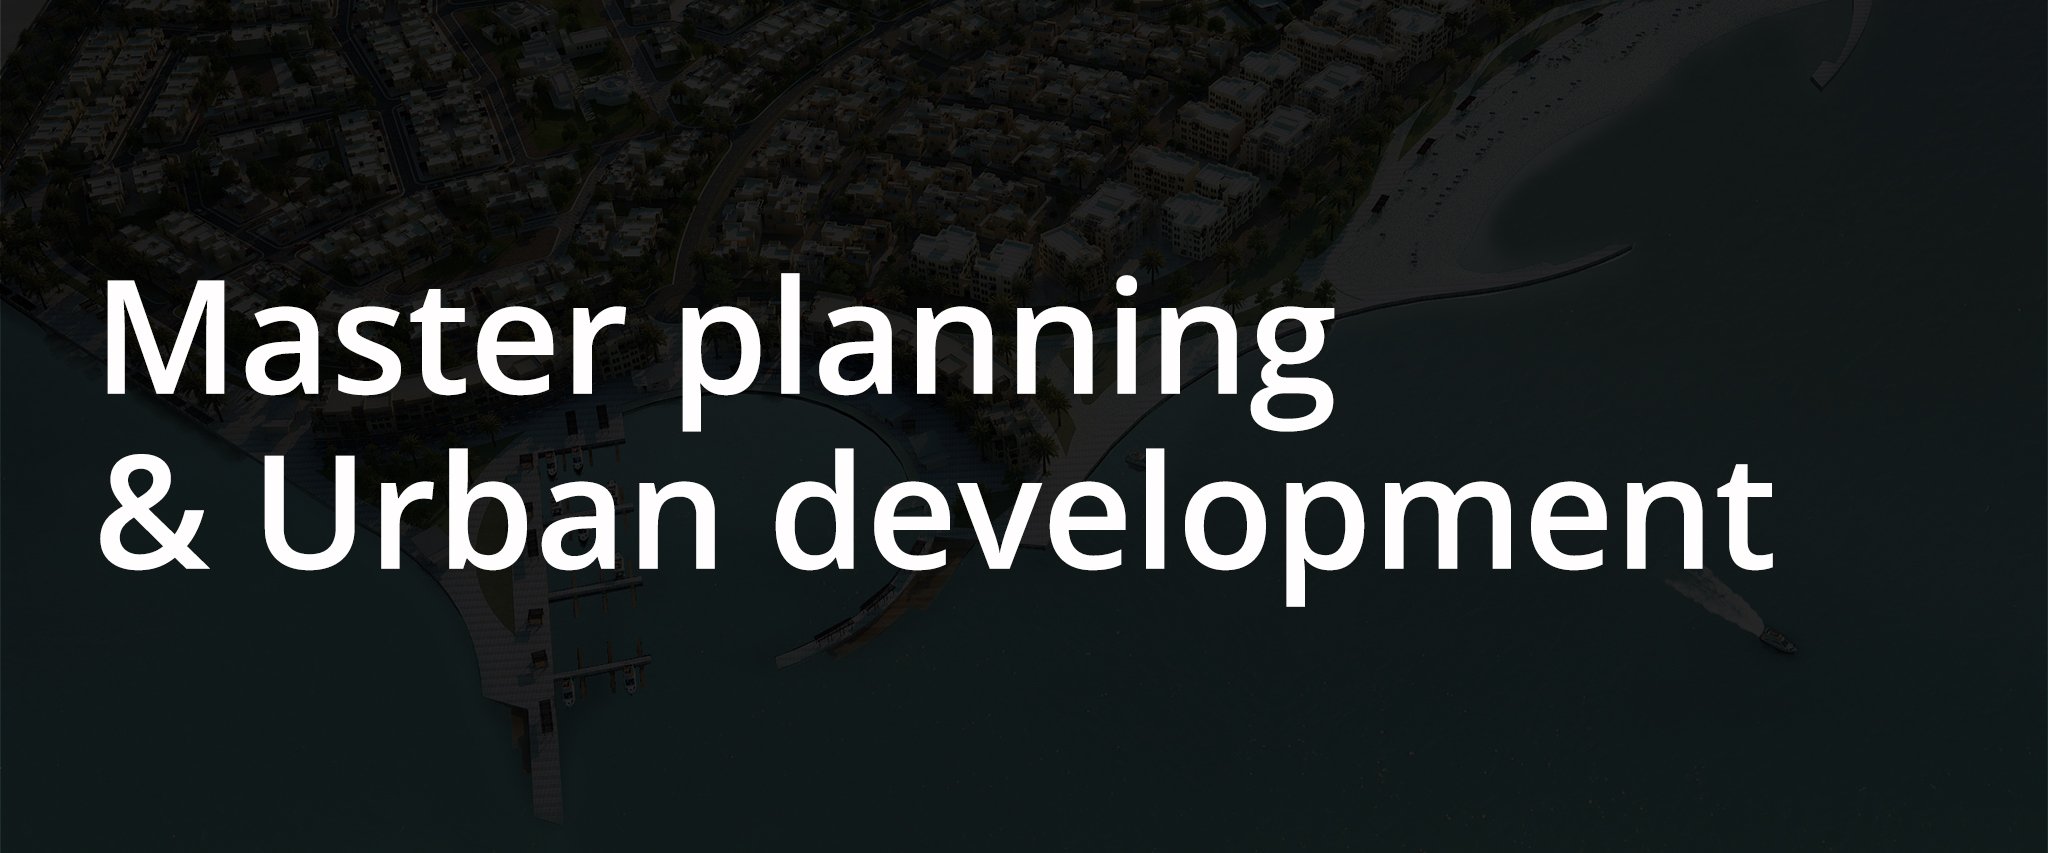 Category Buttons_0000_1. Master planning & Urban development.jpg